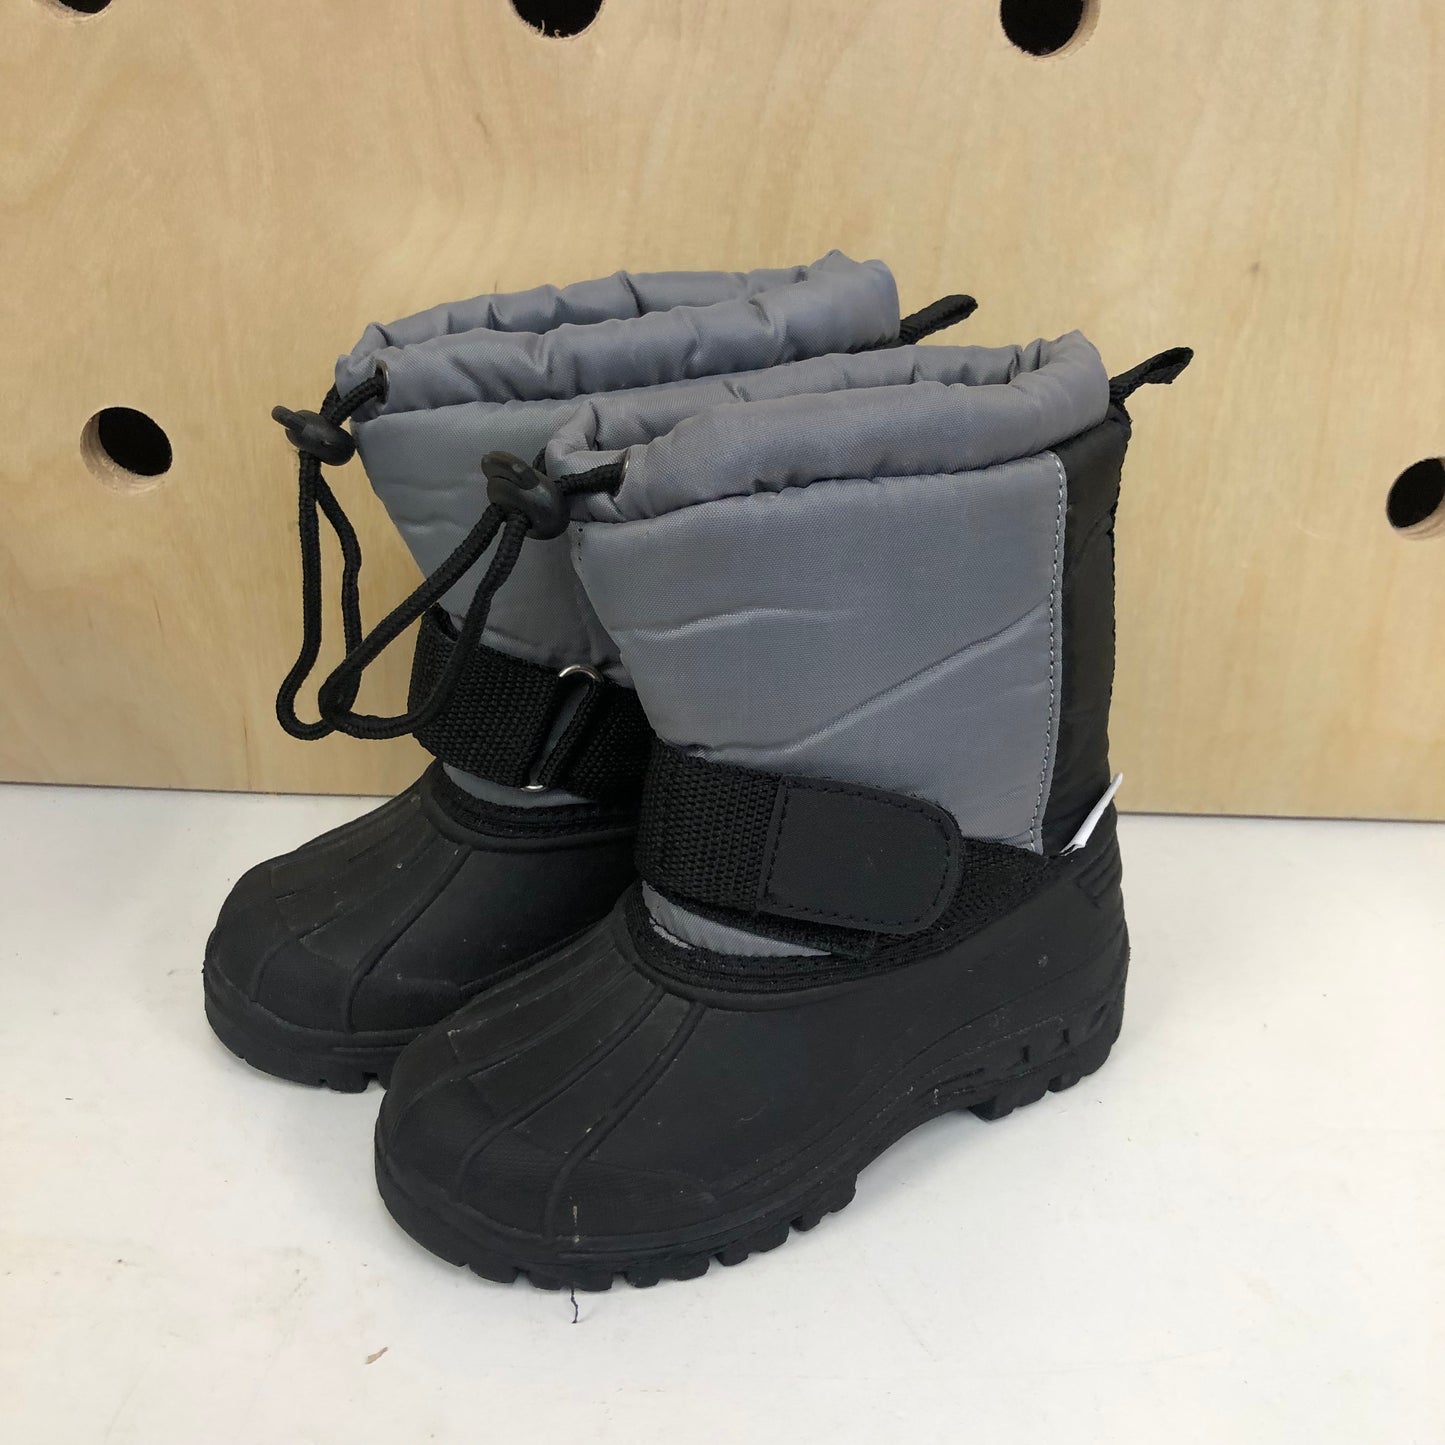 Black + Grey Snow Boots